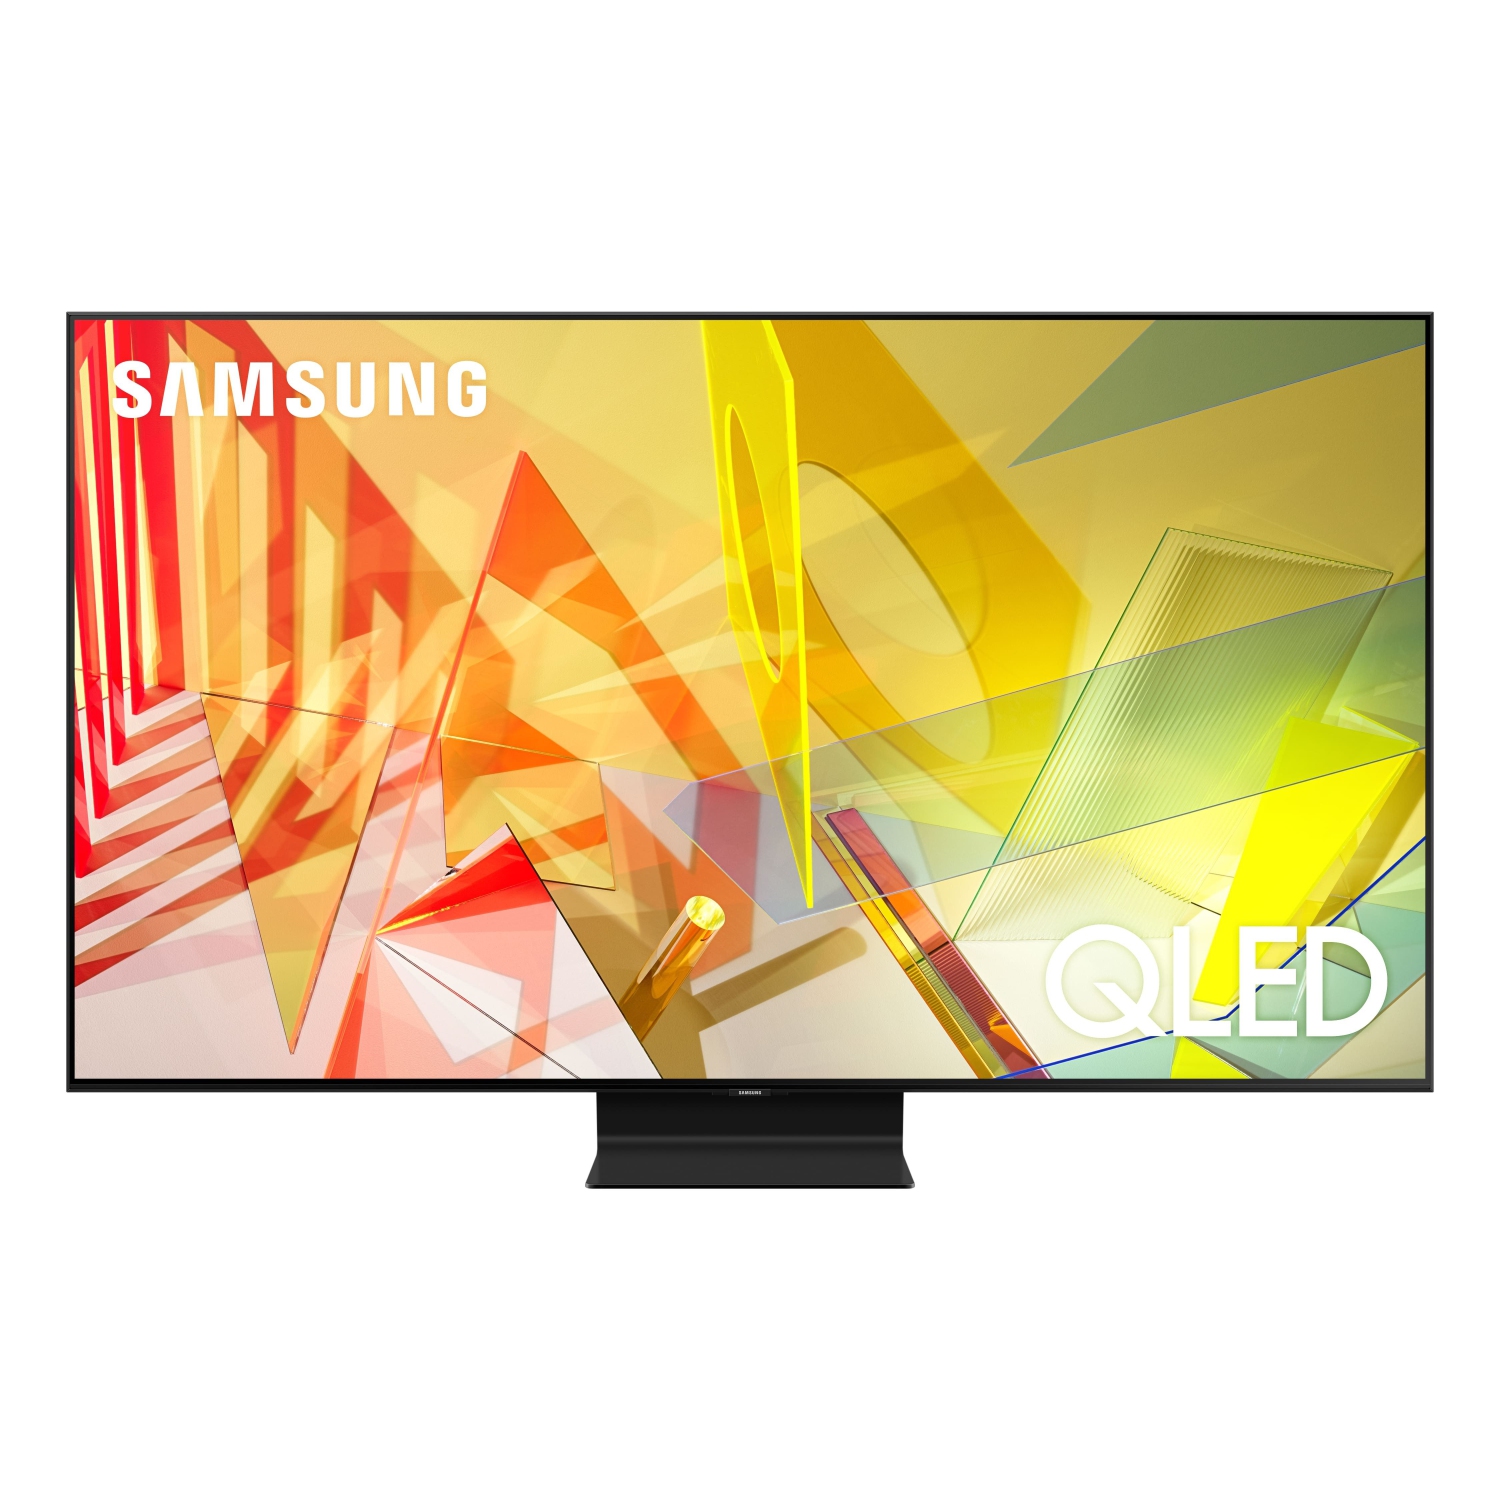 SAMSUNG QN65Q90TA 65" 4K HDR QLED SMART TV Seller Provided Warranty Included